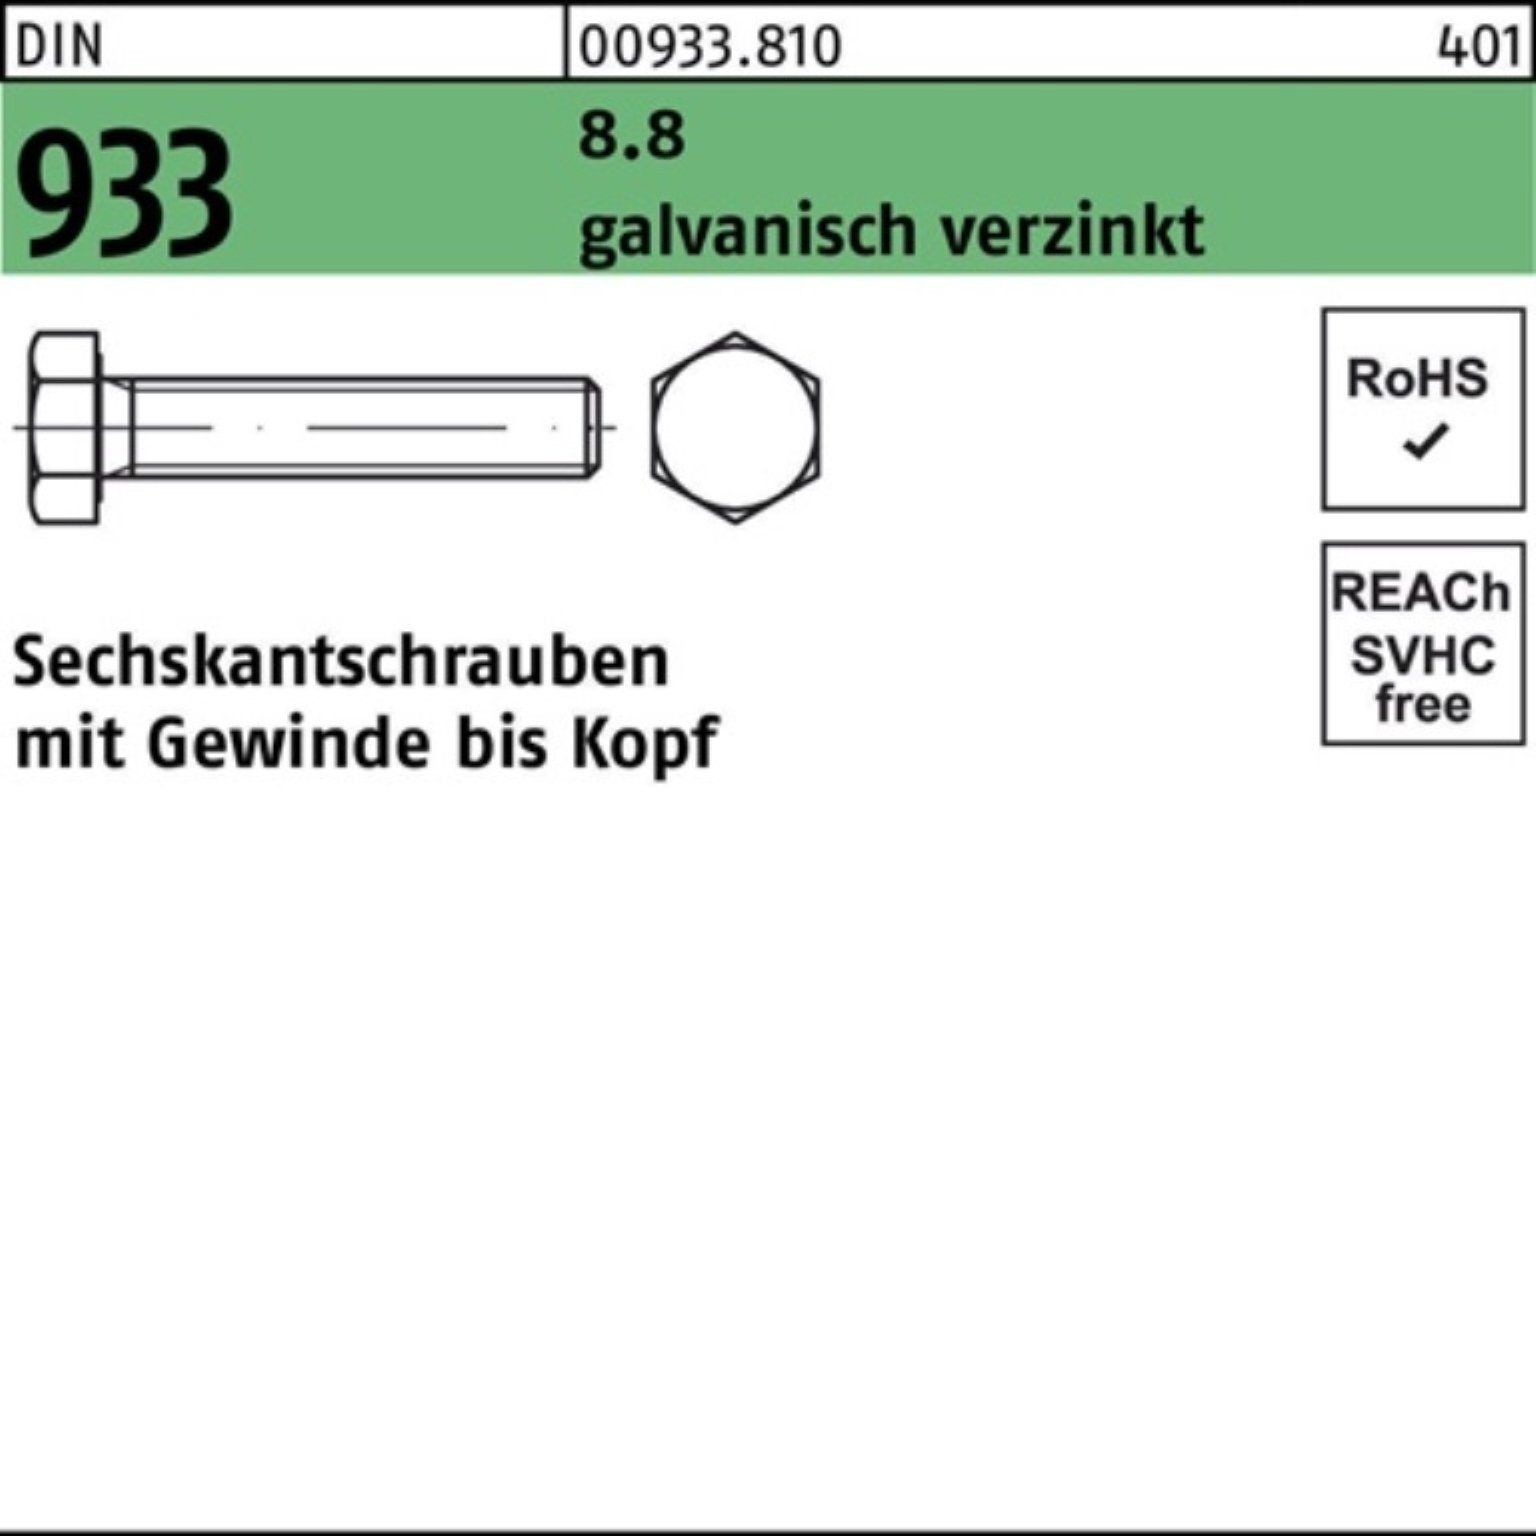 Sechskantschraube VG 100er 25 Reyher Pack 933 8.8 Stü 100 M5x Sechskantschraube galv.verz. DIN